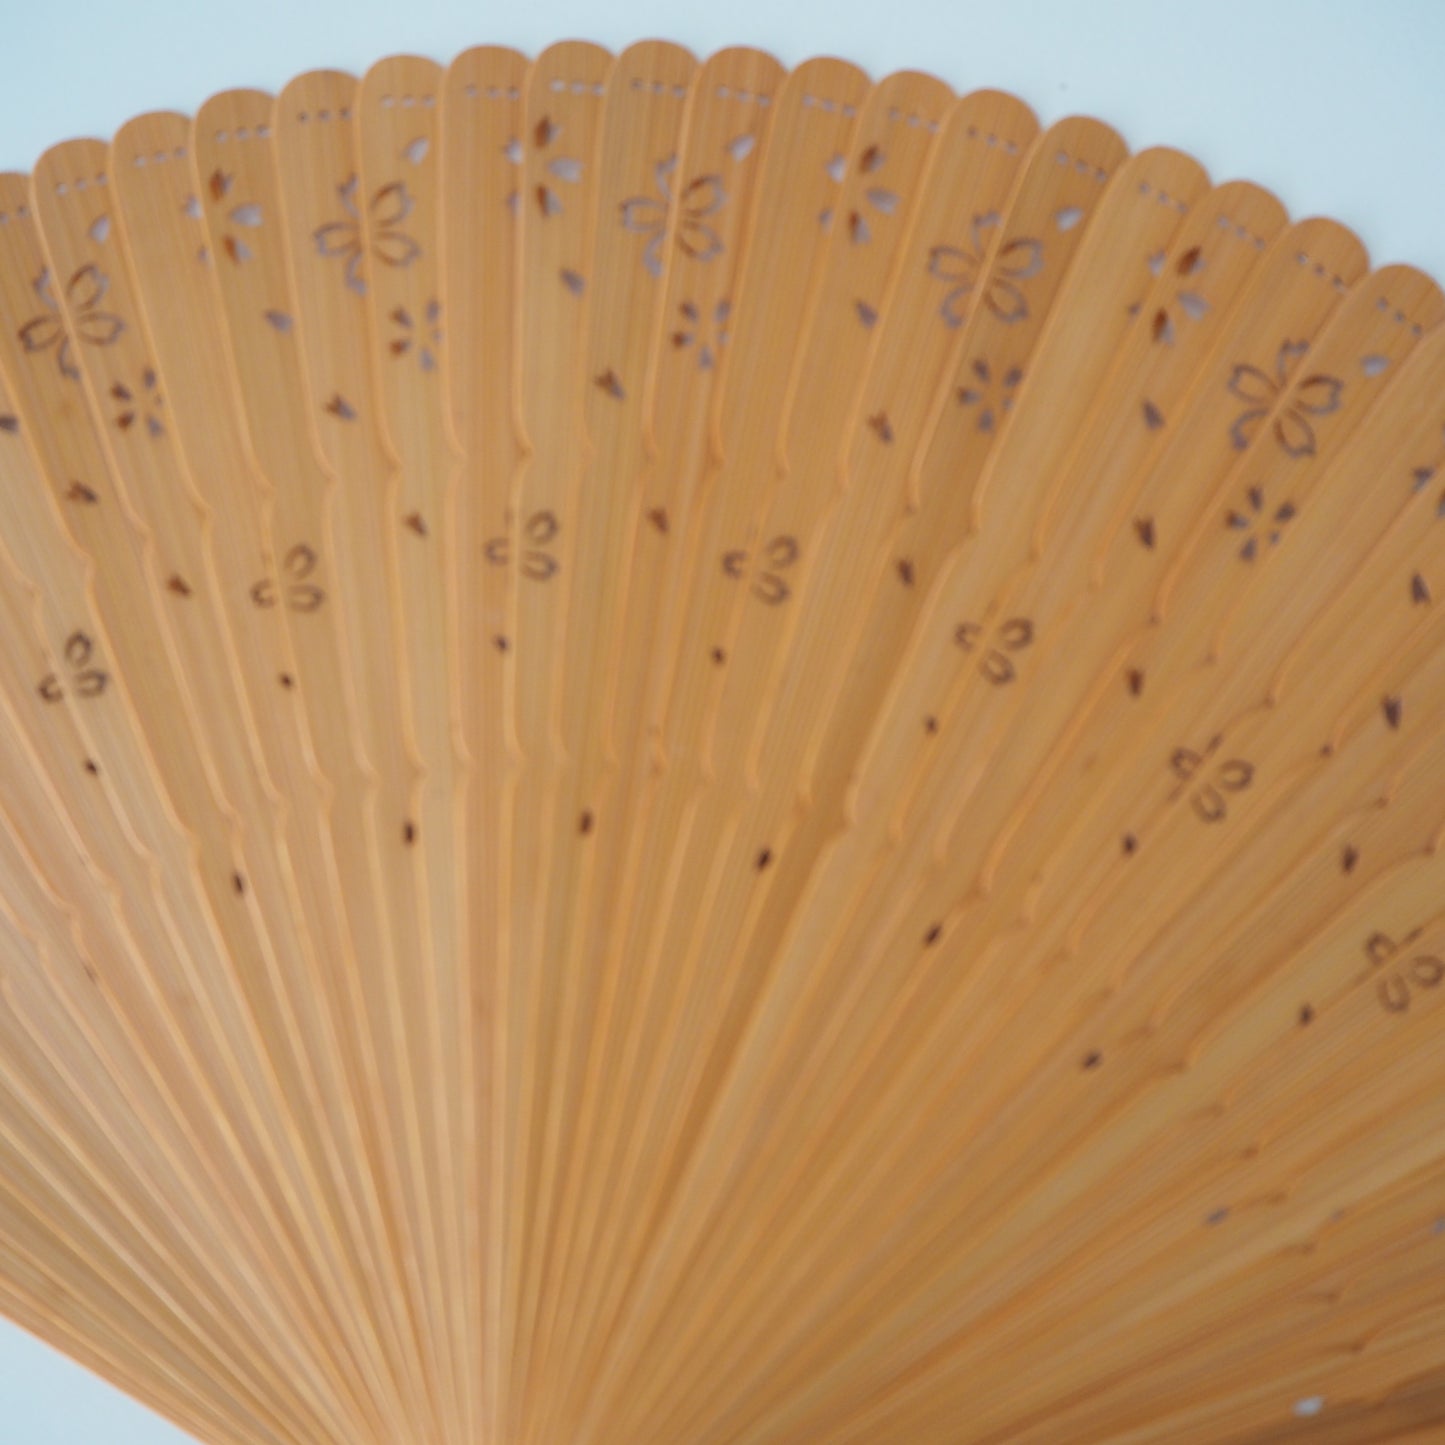 Wooden Folding Fan - Natural Bamboo Sakura